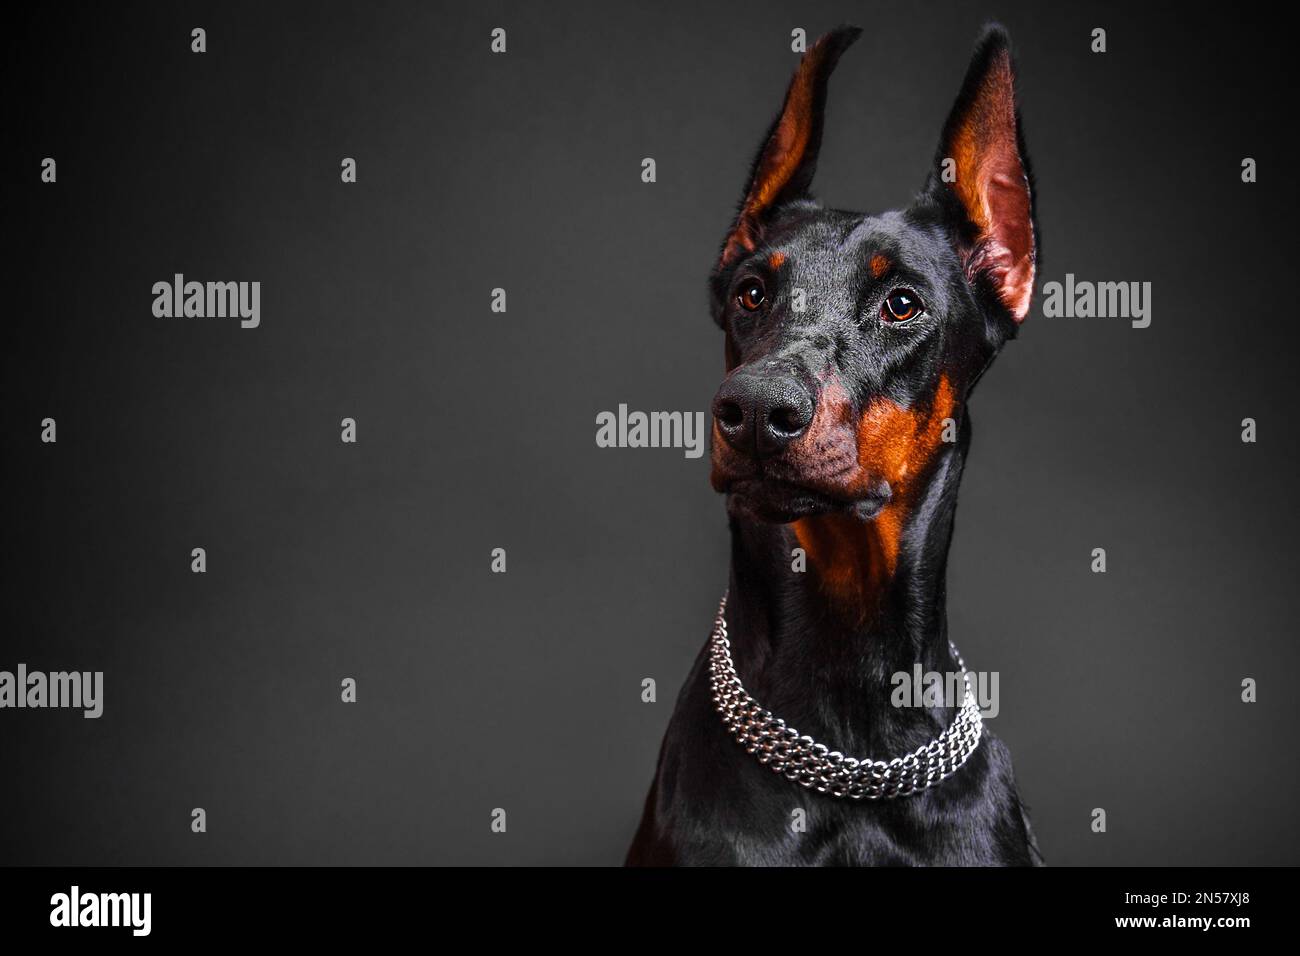 beautiful Doberman breed dog on a dark background Stock Photo